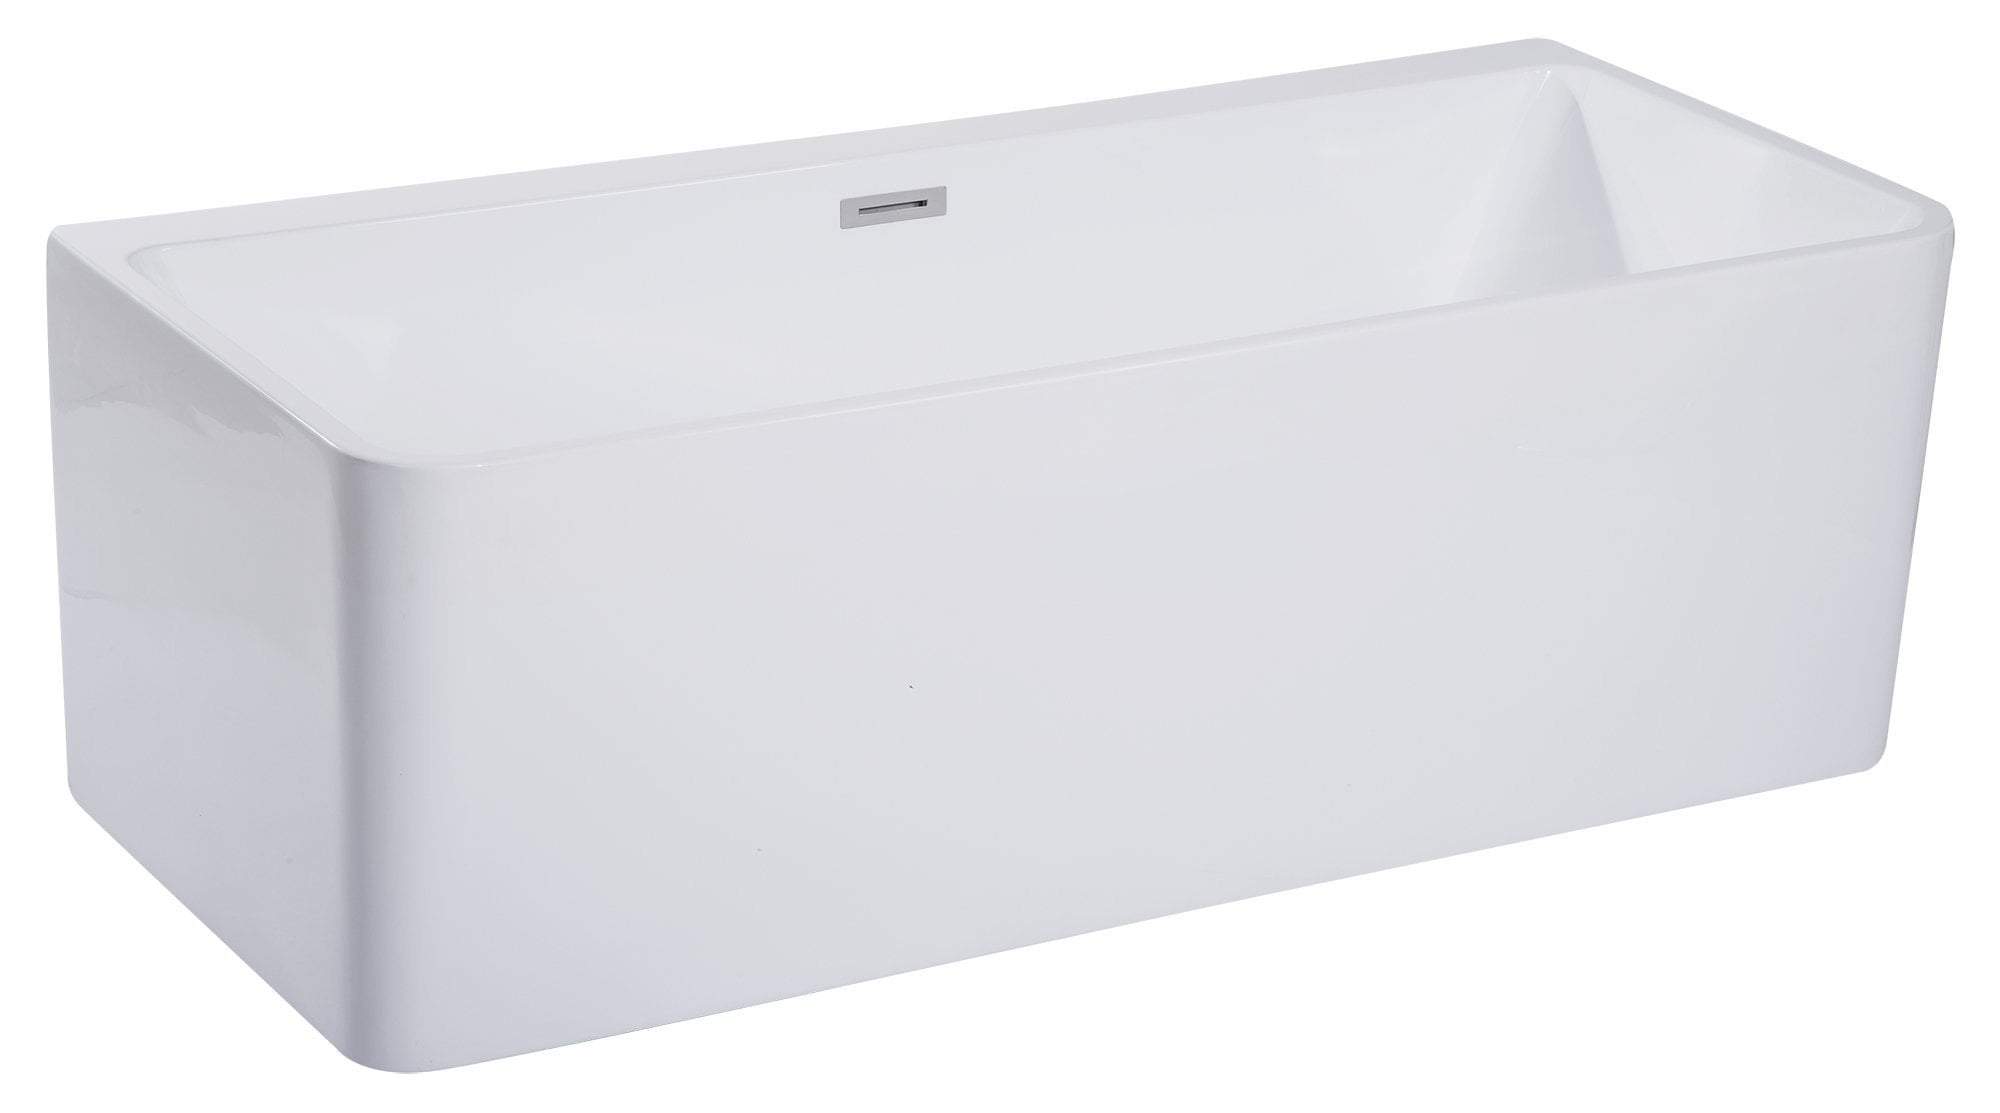 67 inch White Rectangular Acrylic Free Standing Soaking Bathtub